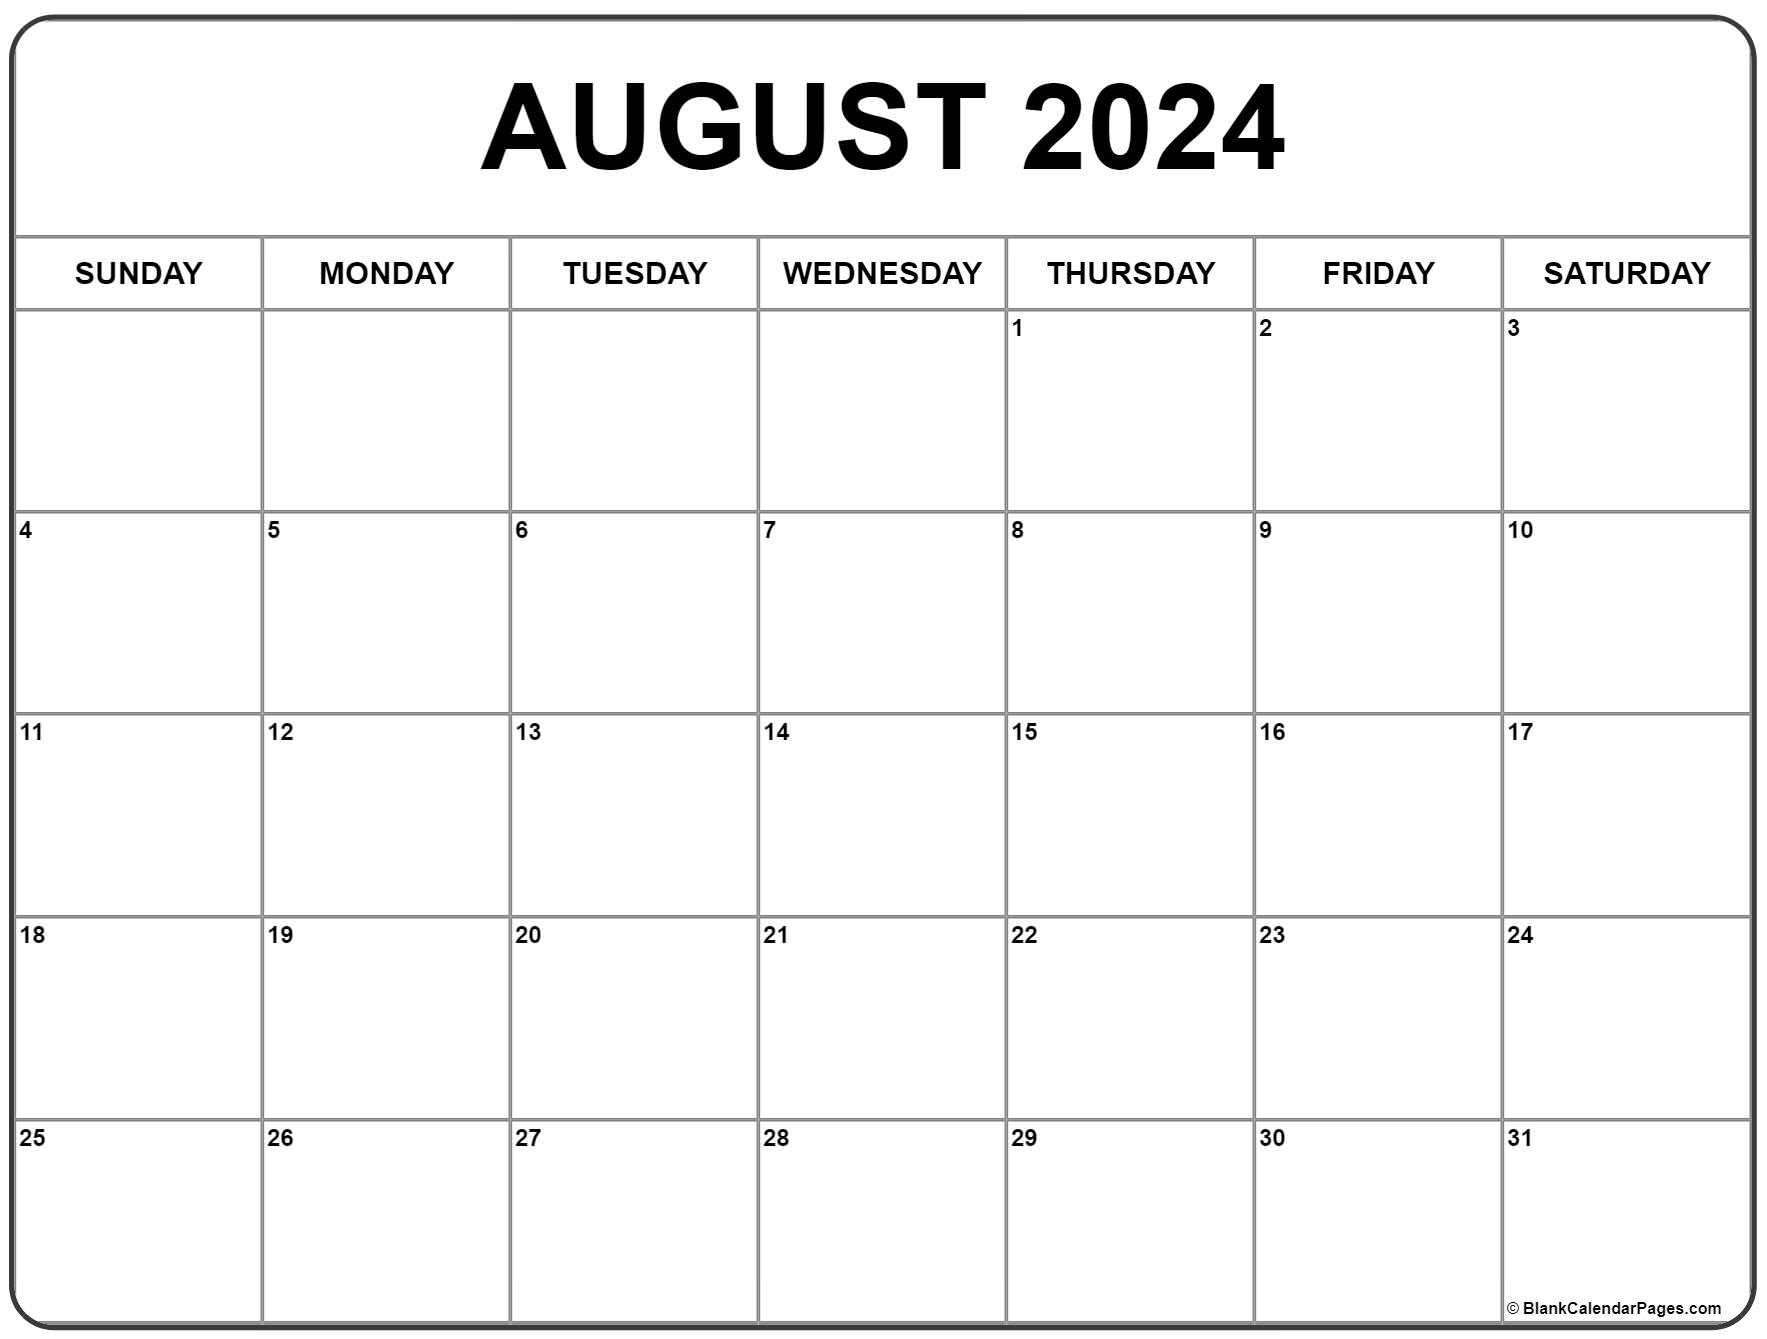 August 2024 Calendar | Free Printable Calendar for August 2024 Calendar Printable Free